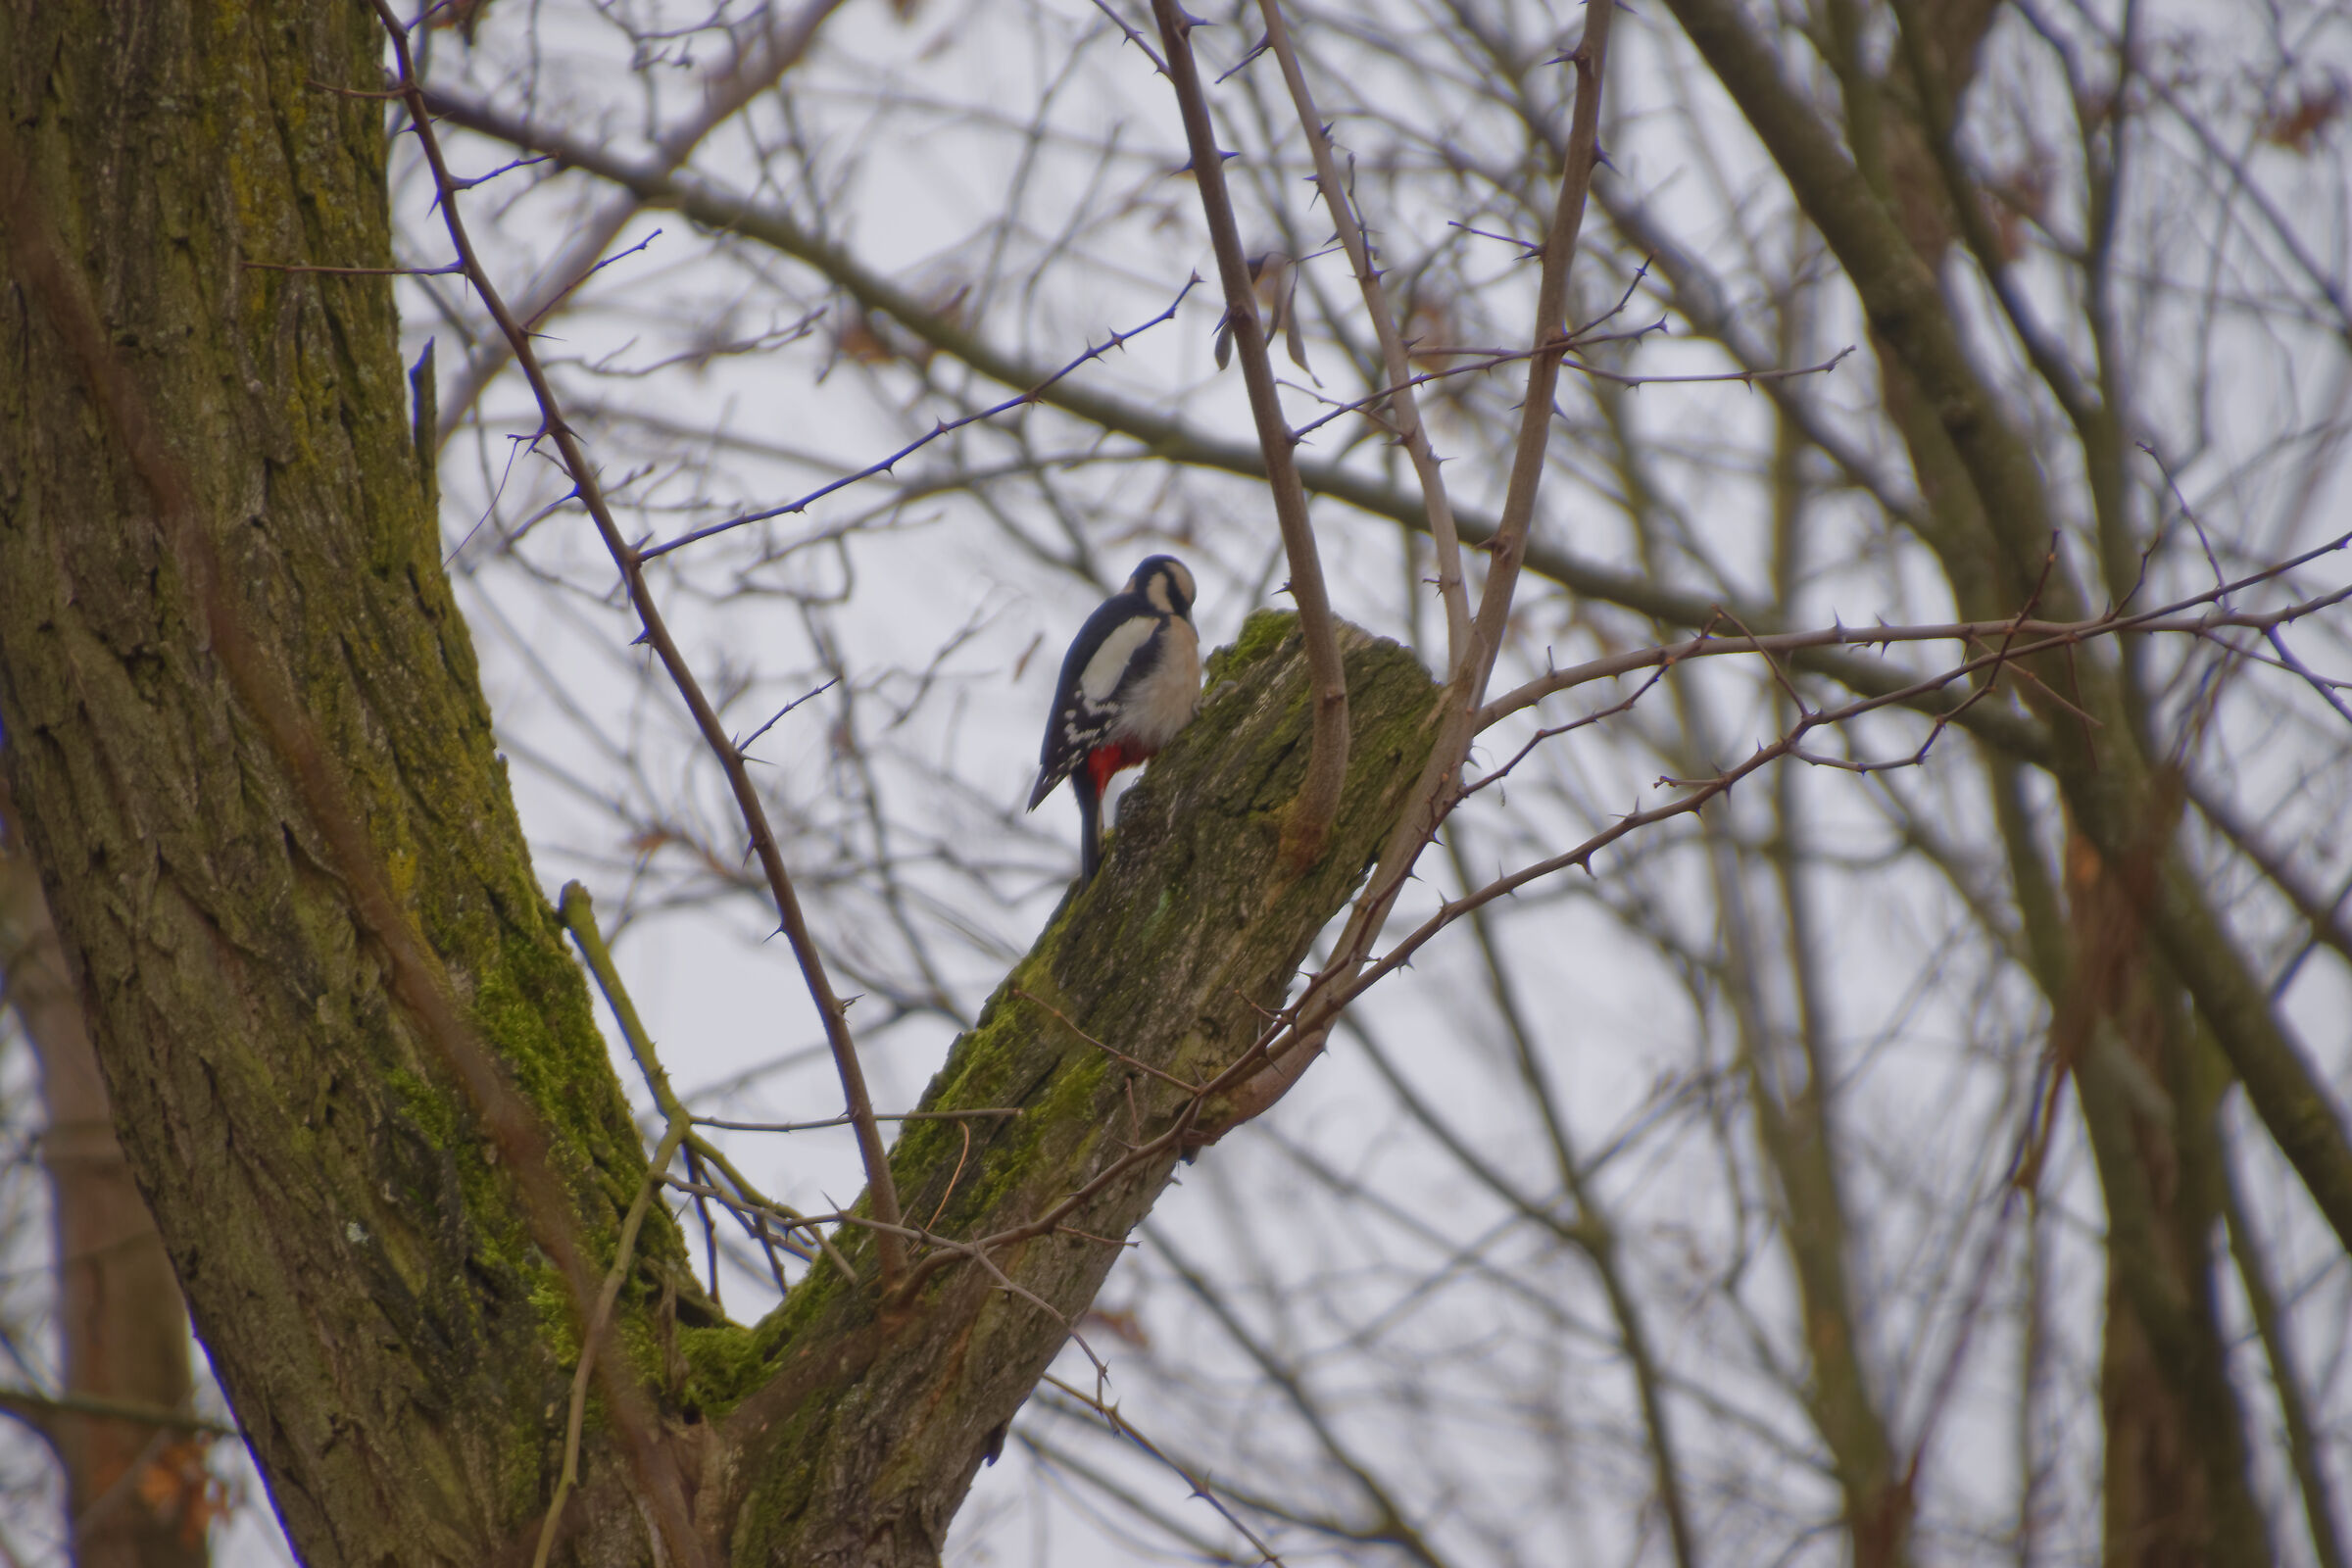 The woodpecker?...